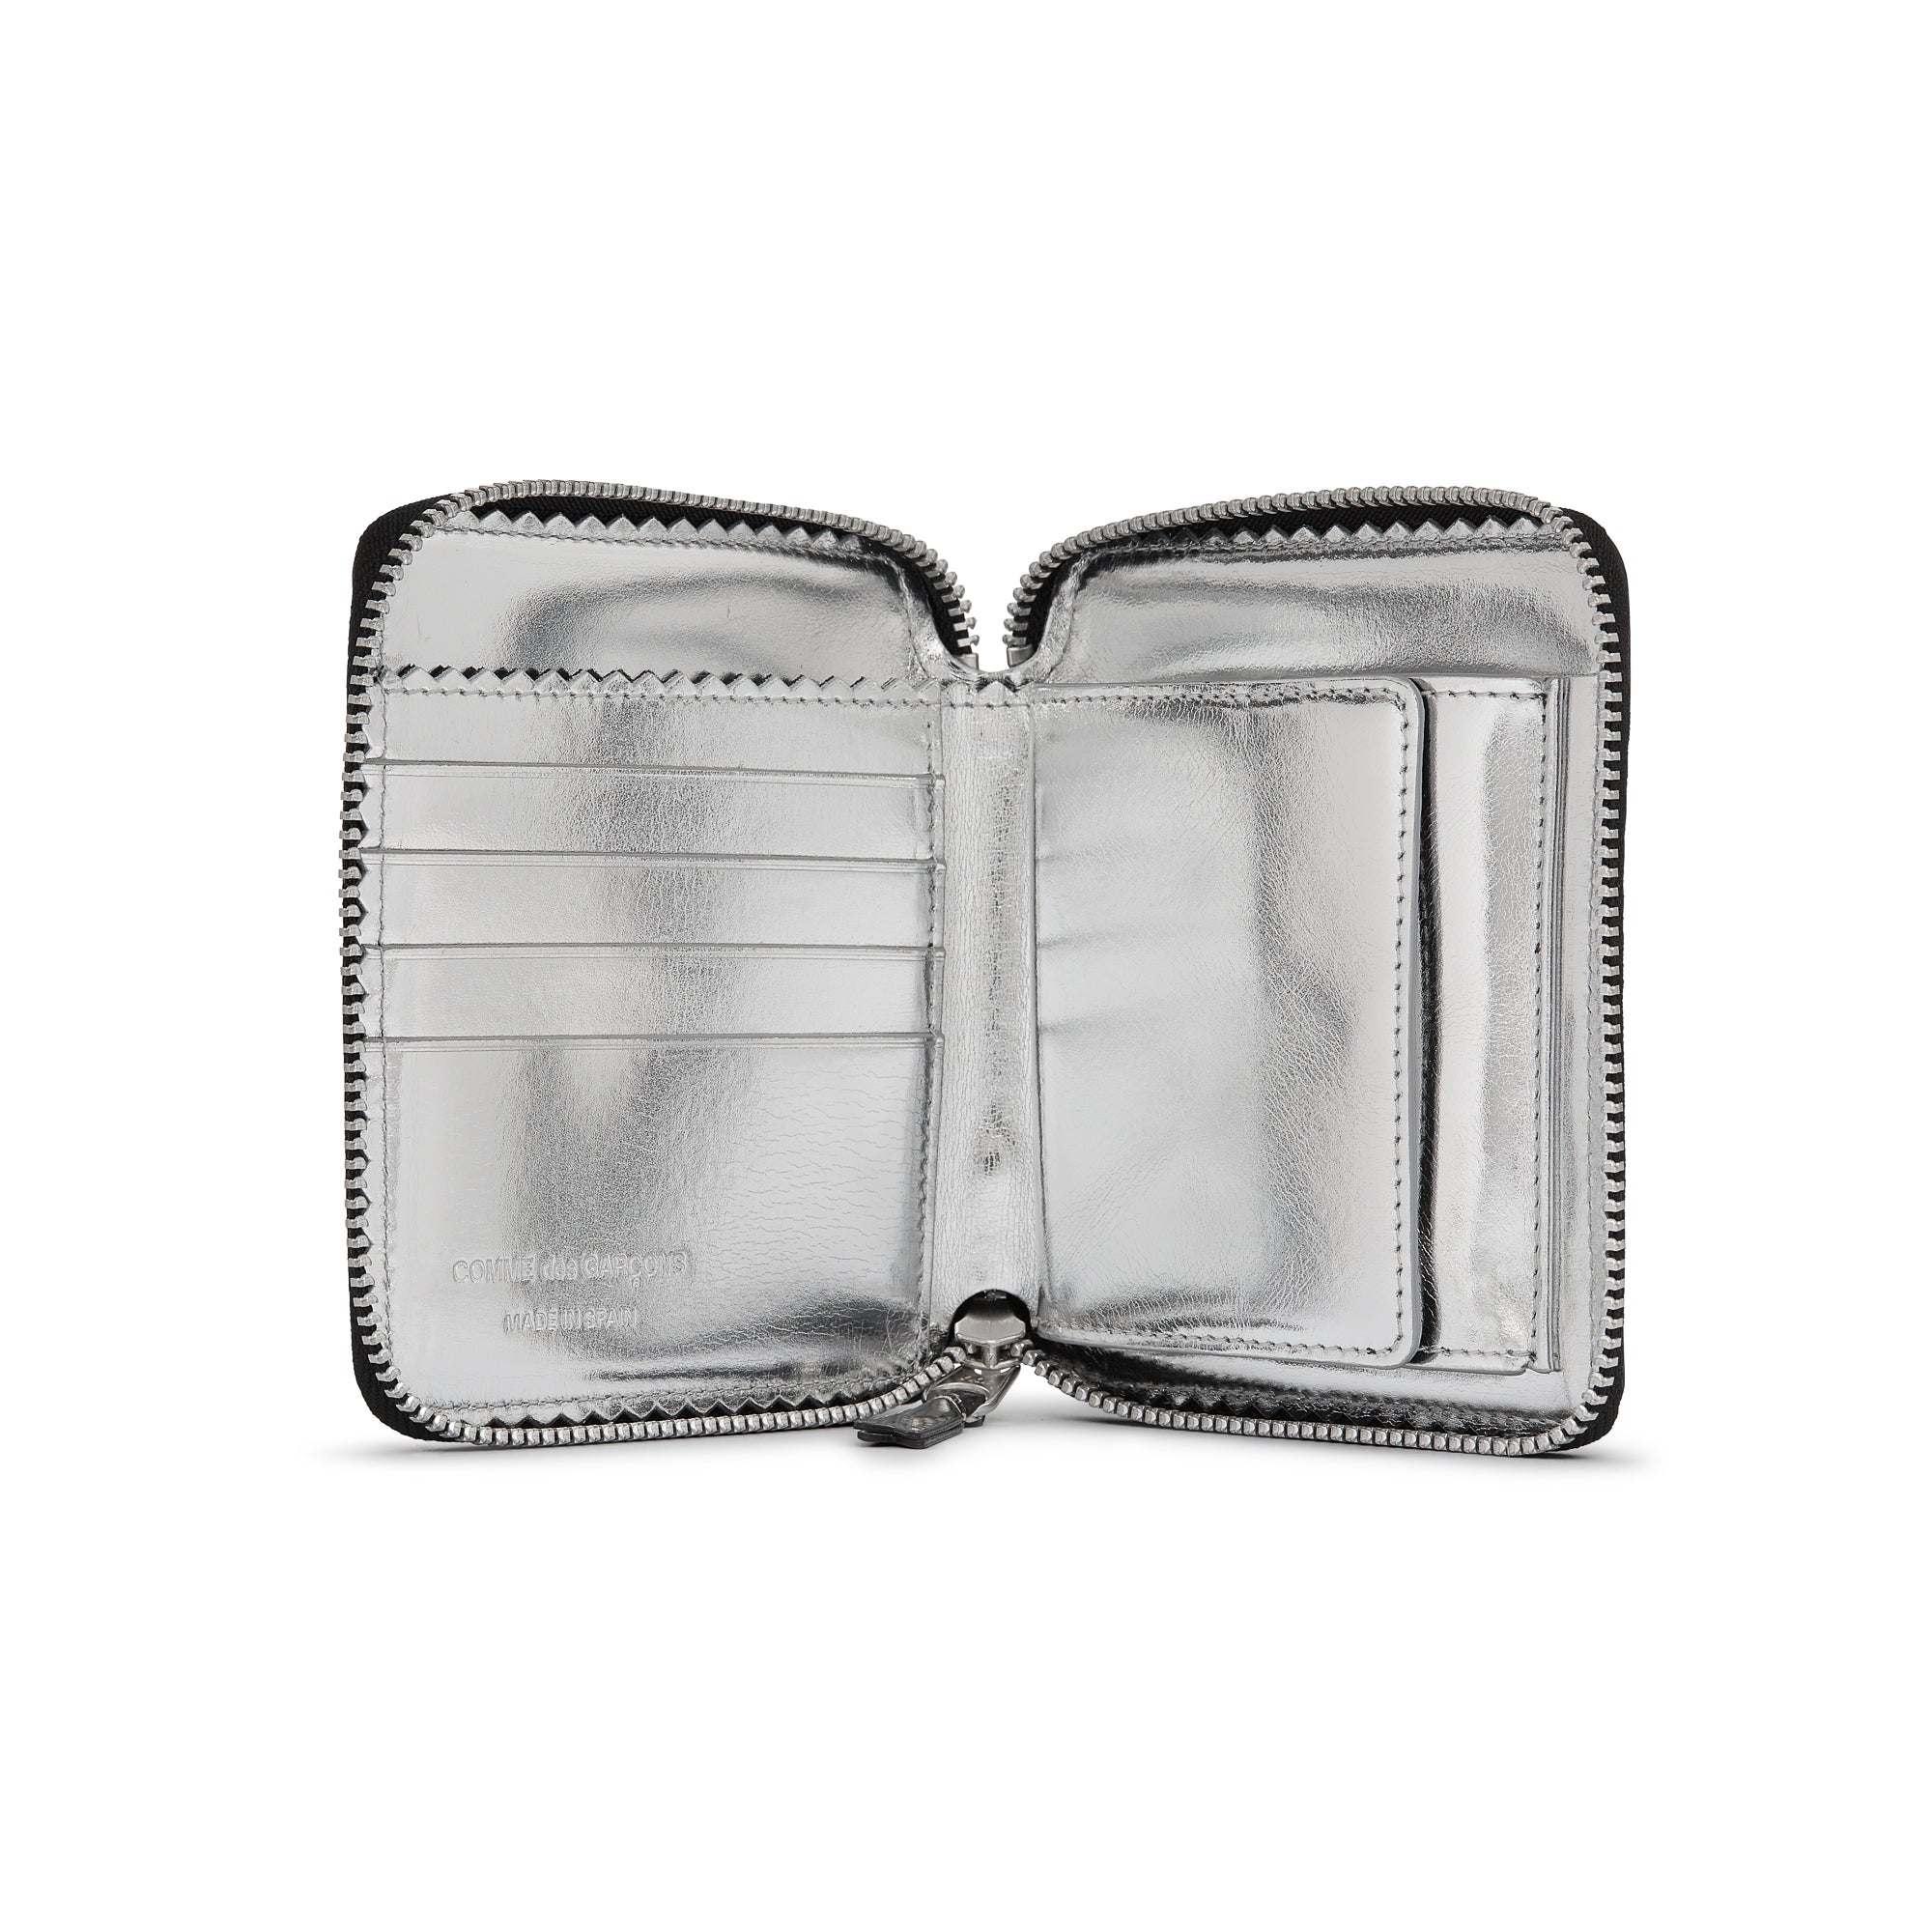 CDG Wallet - Mirror Inside Black/Silver Full Zip Around Wallet - (Black SA2100MI) view 2